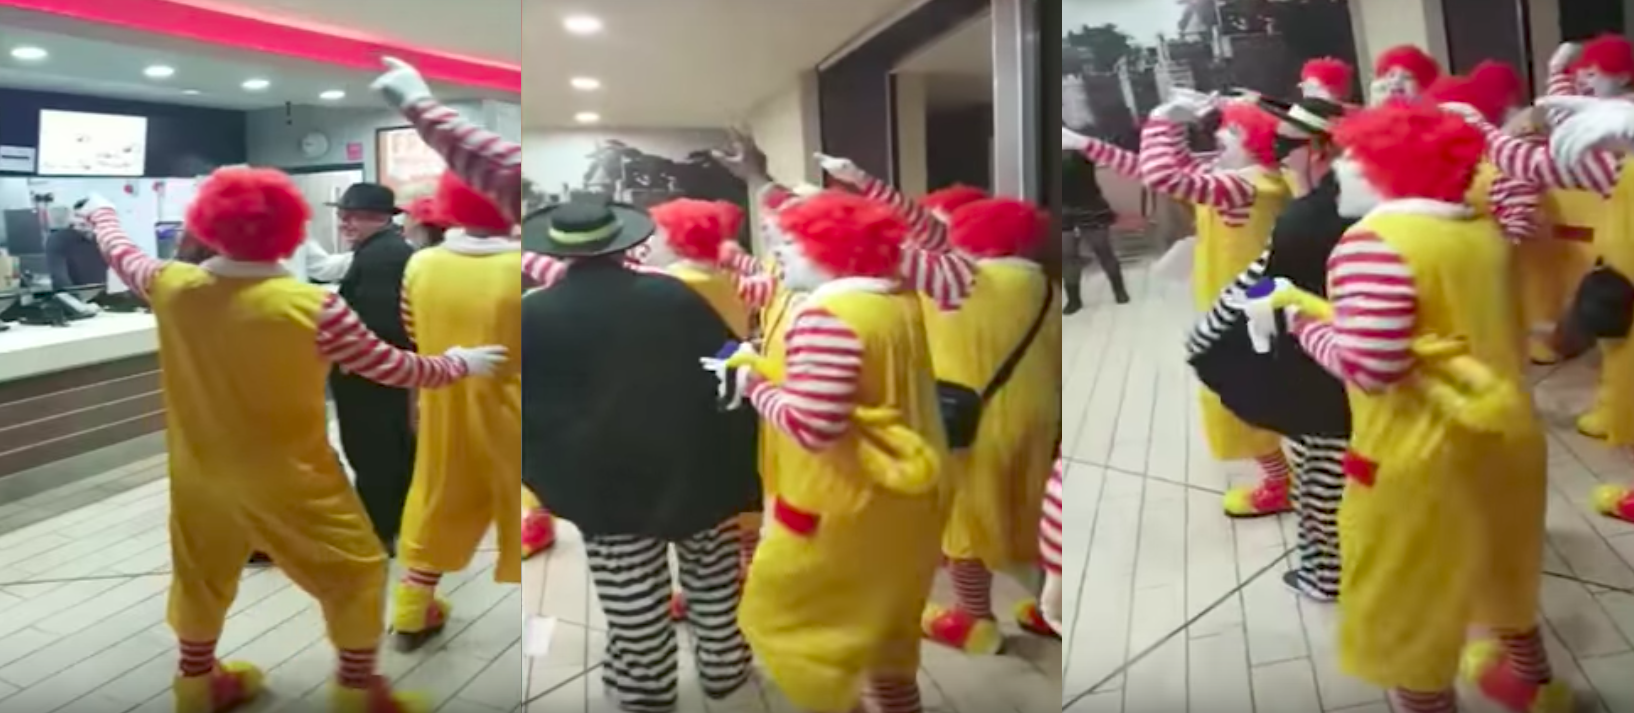 Gang Of Ronald McDonald Clowns Storms Burger King, Taunting Workers